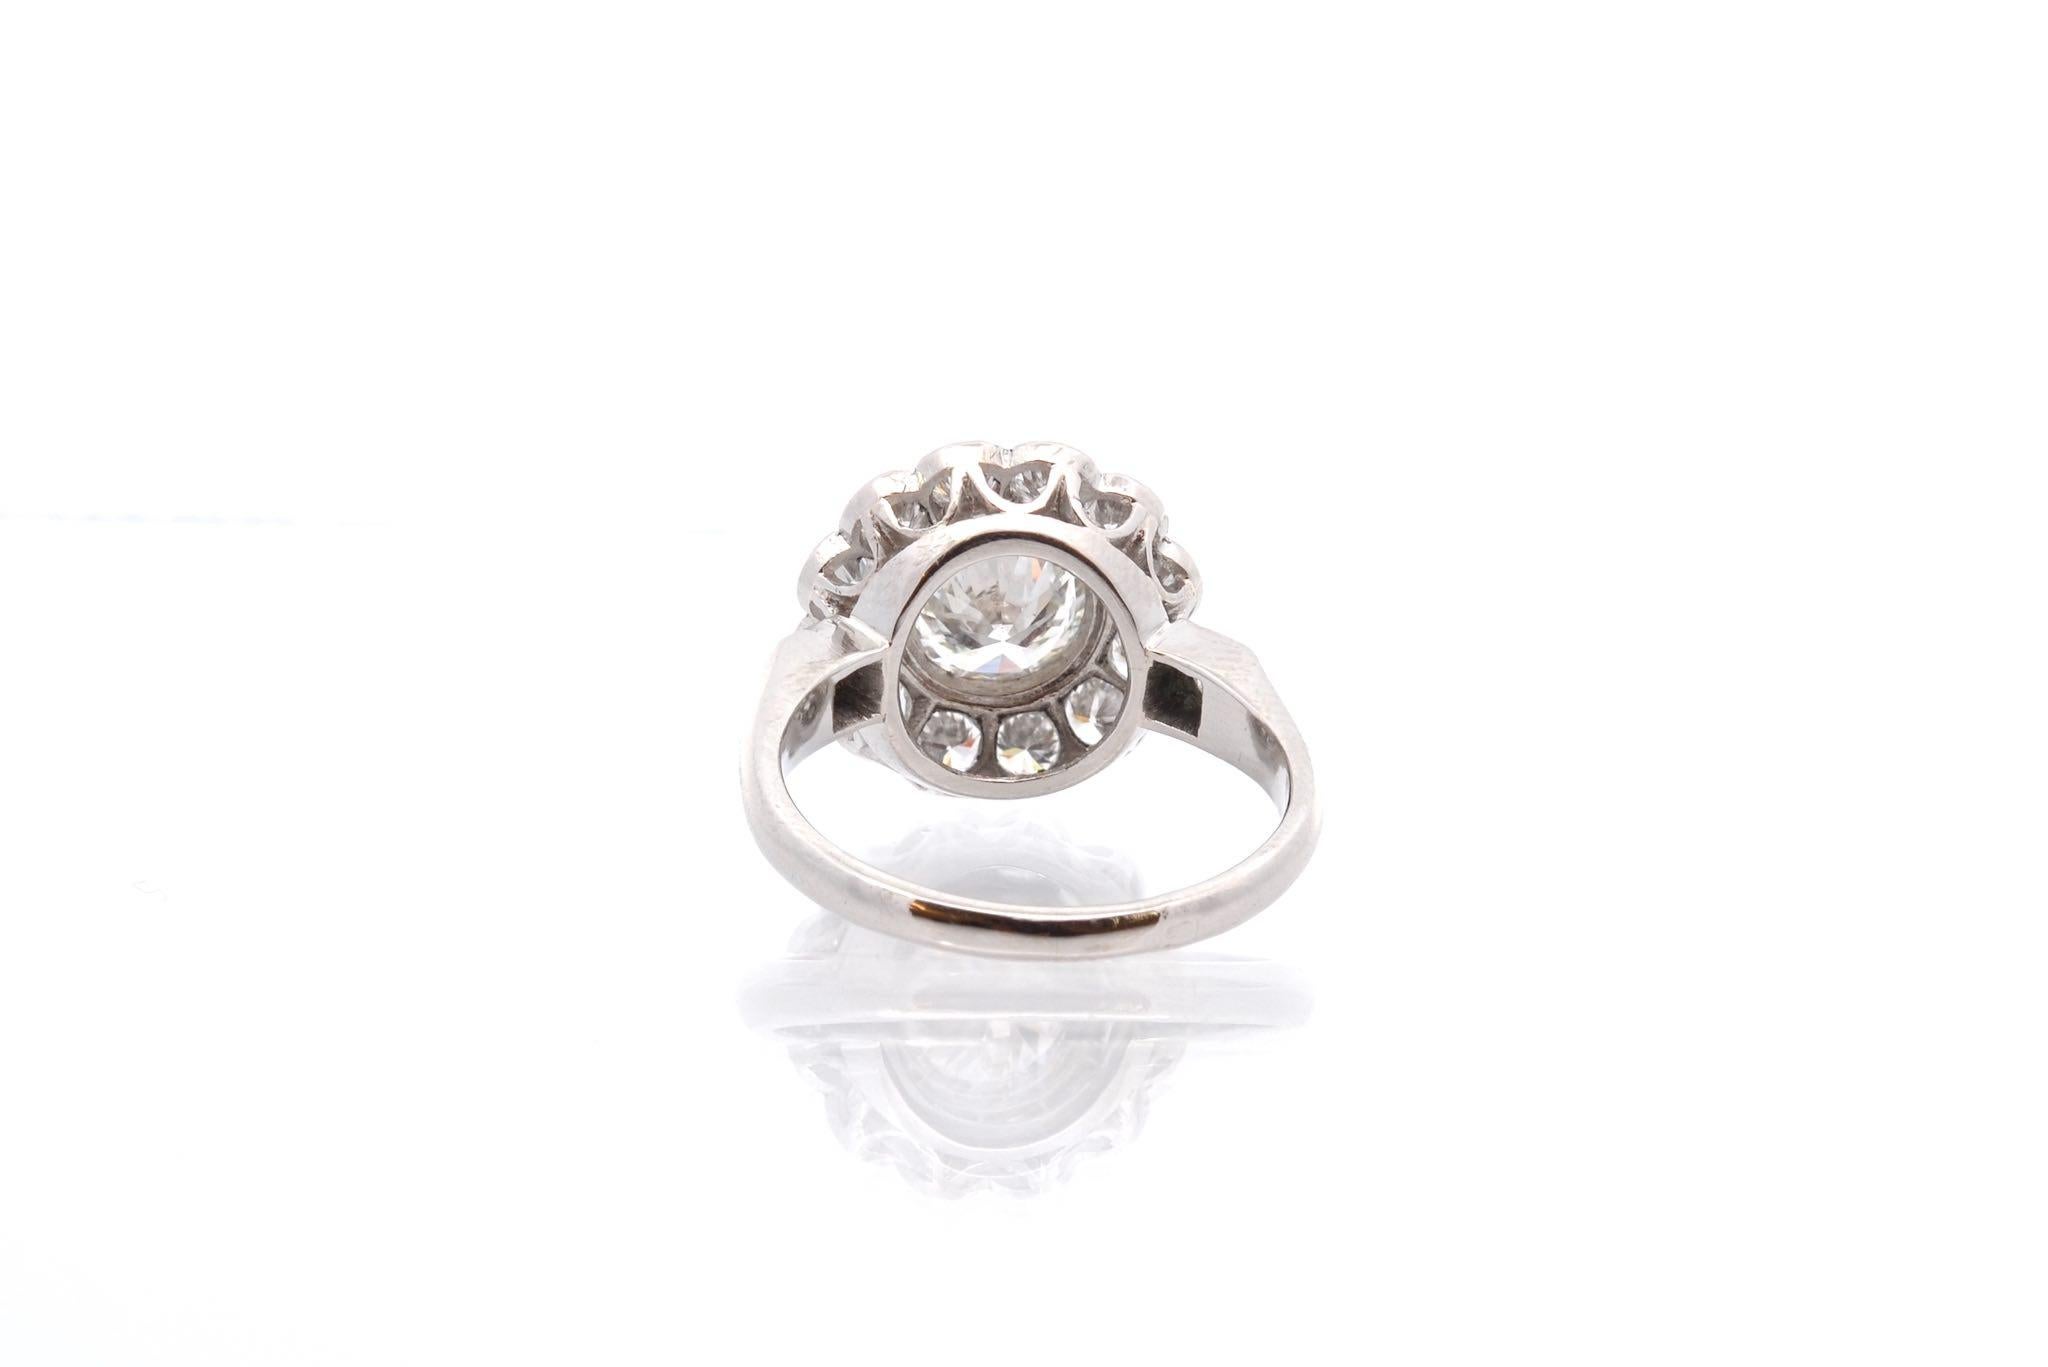  0, 92 ct I/VS1 diamond ring in platinum In Good Condition For Sale In PARIS, FR